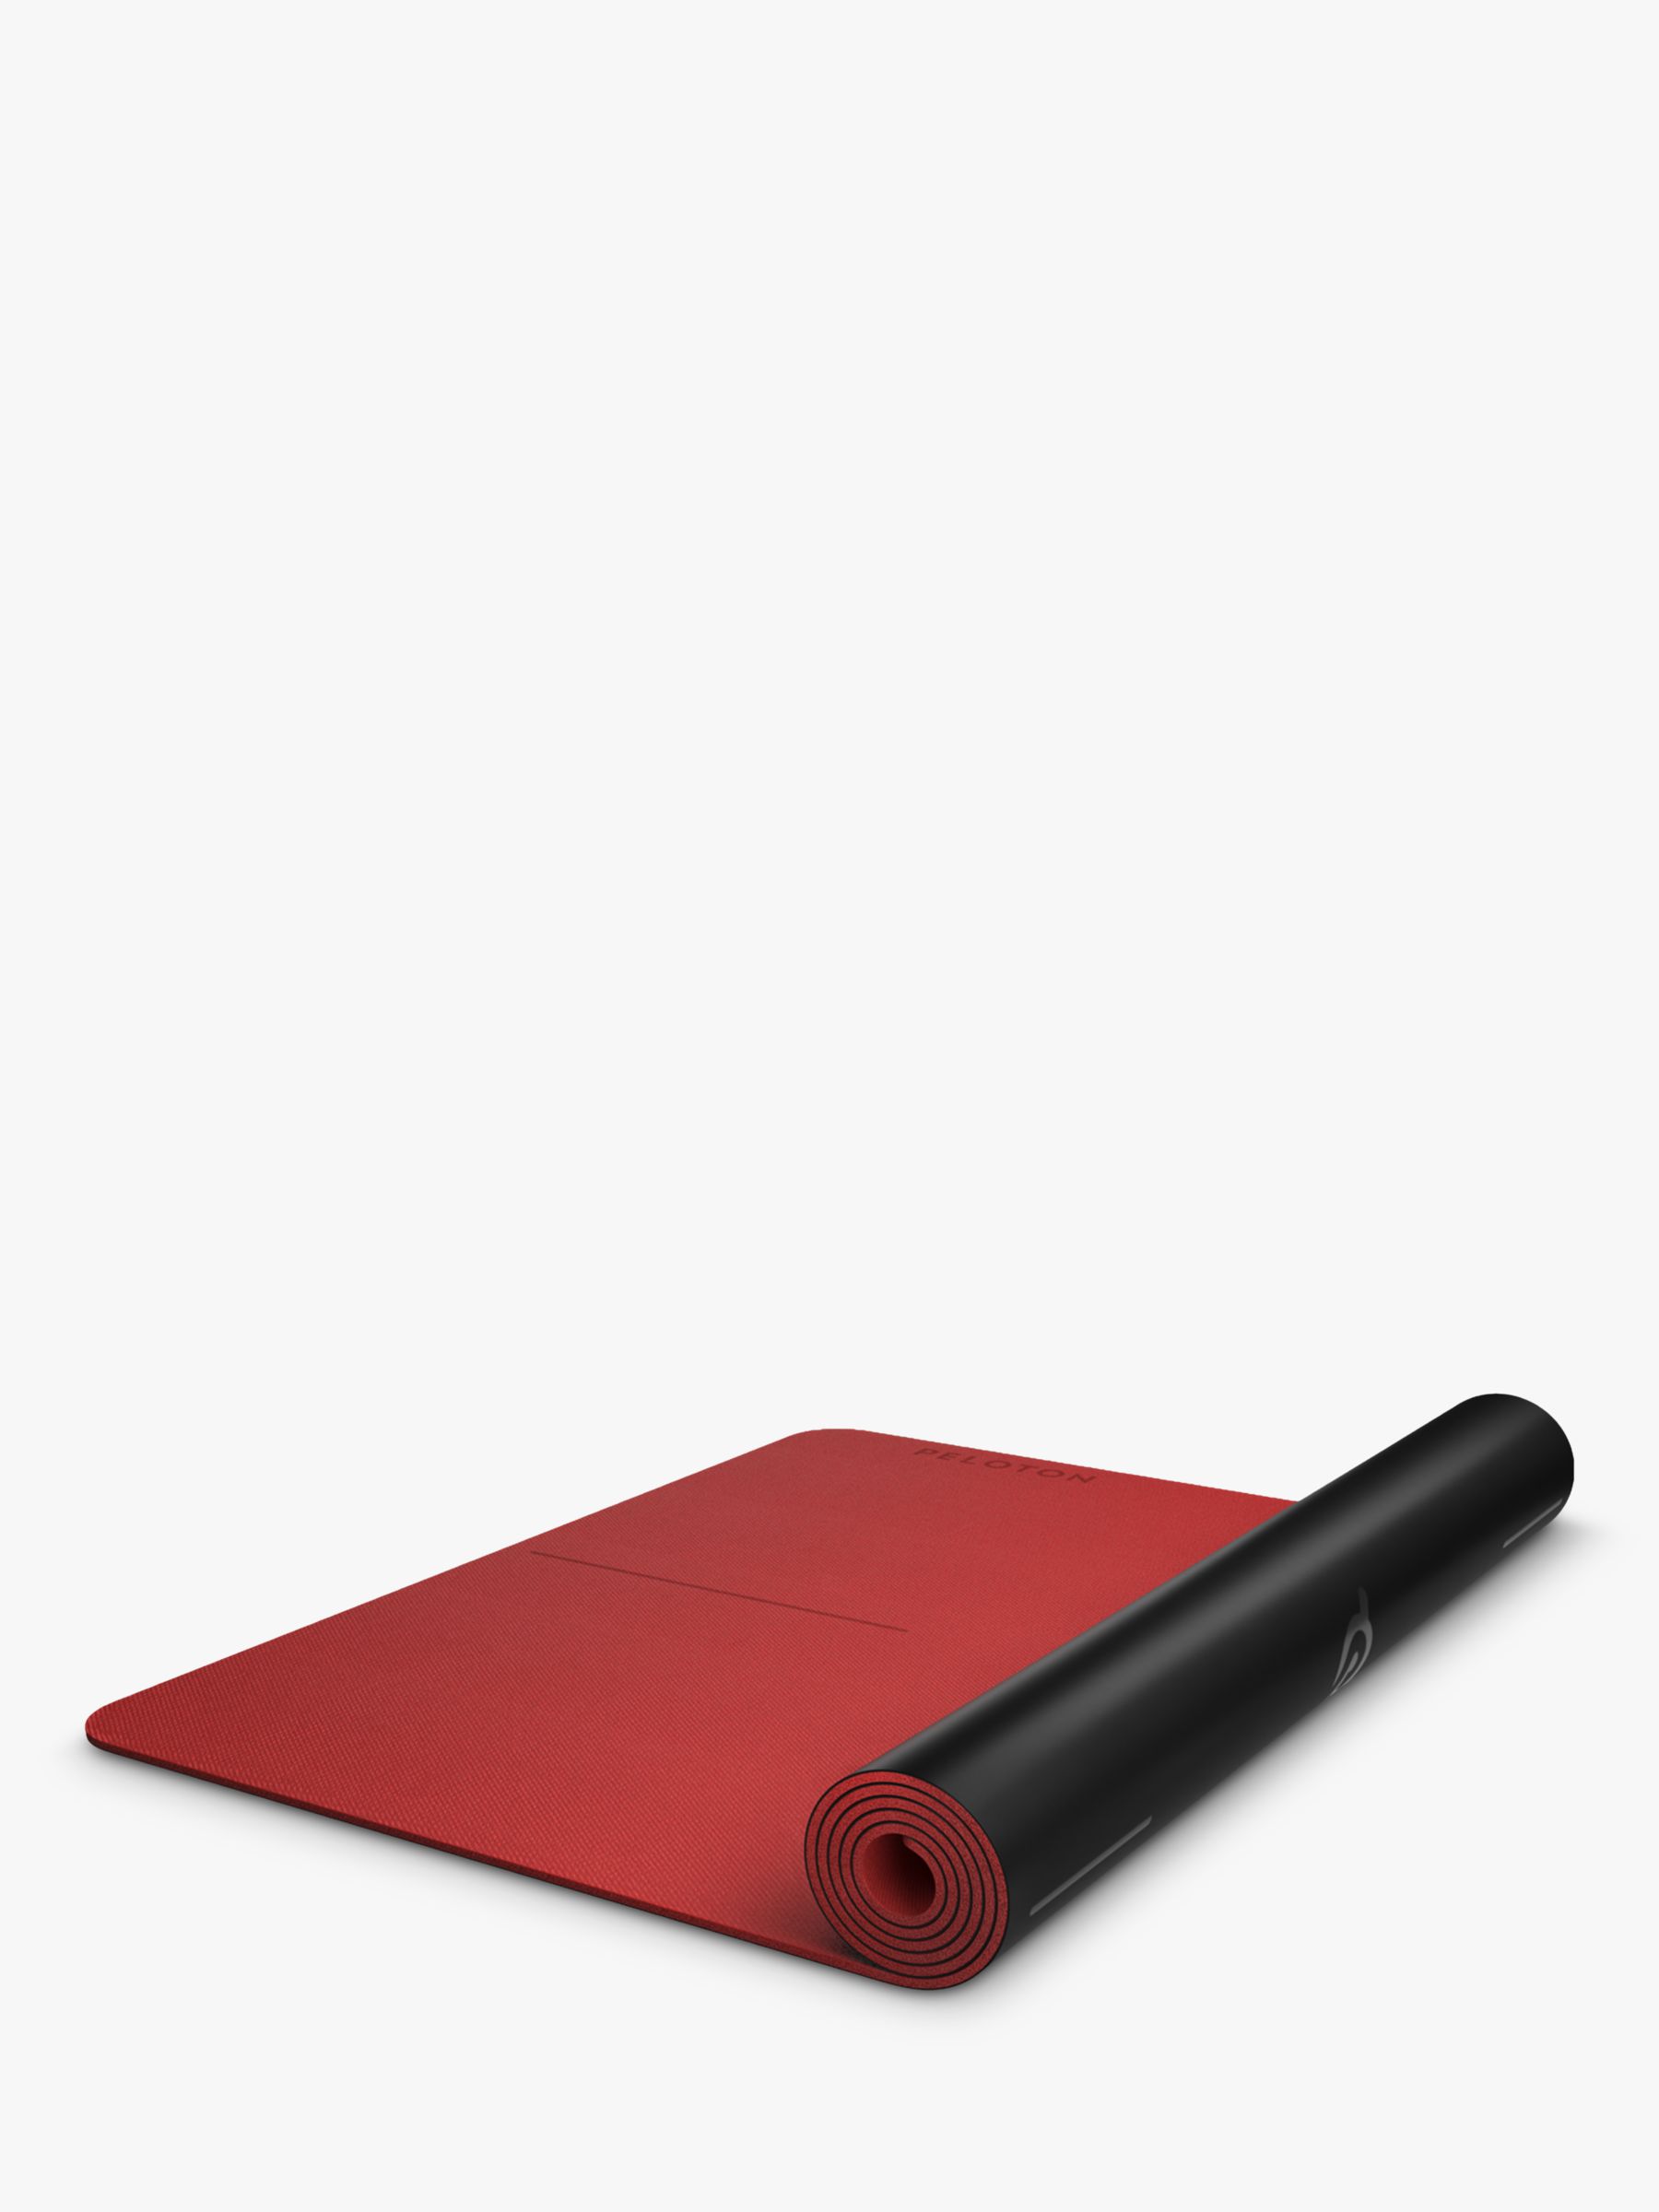 Peloton Reversible Yoga Workout Mat 71” X 26” NEW Red Black